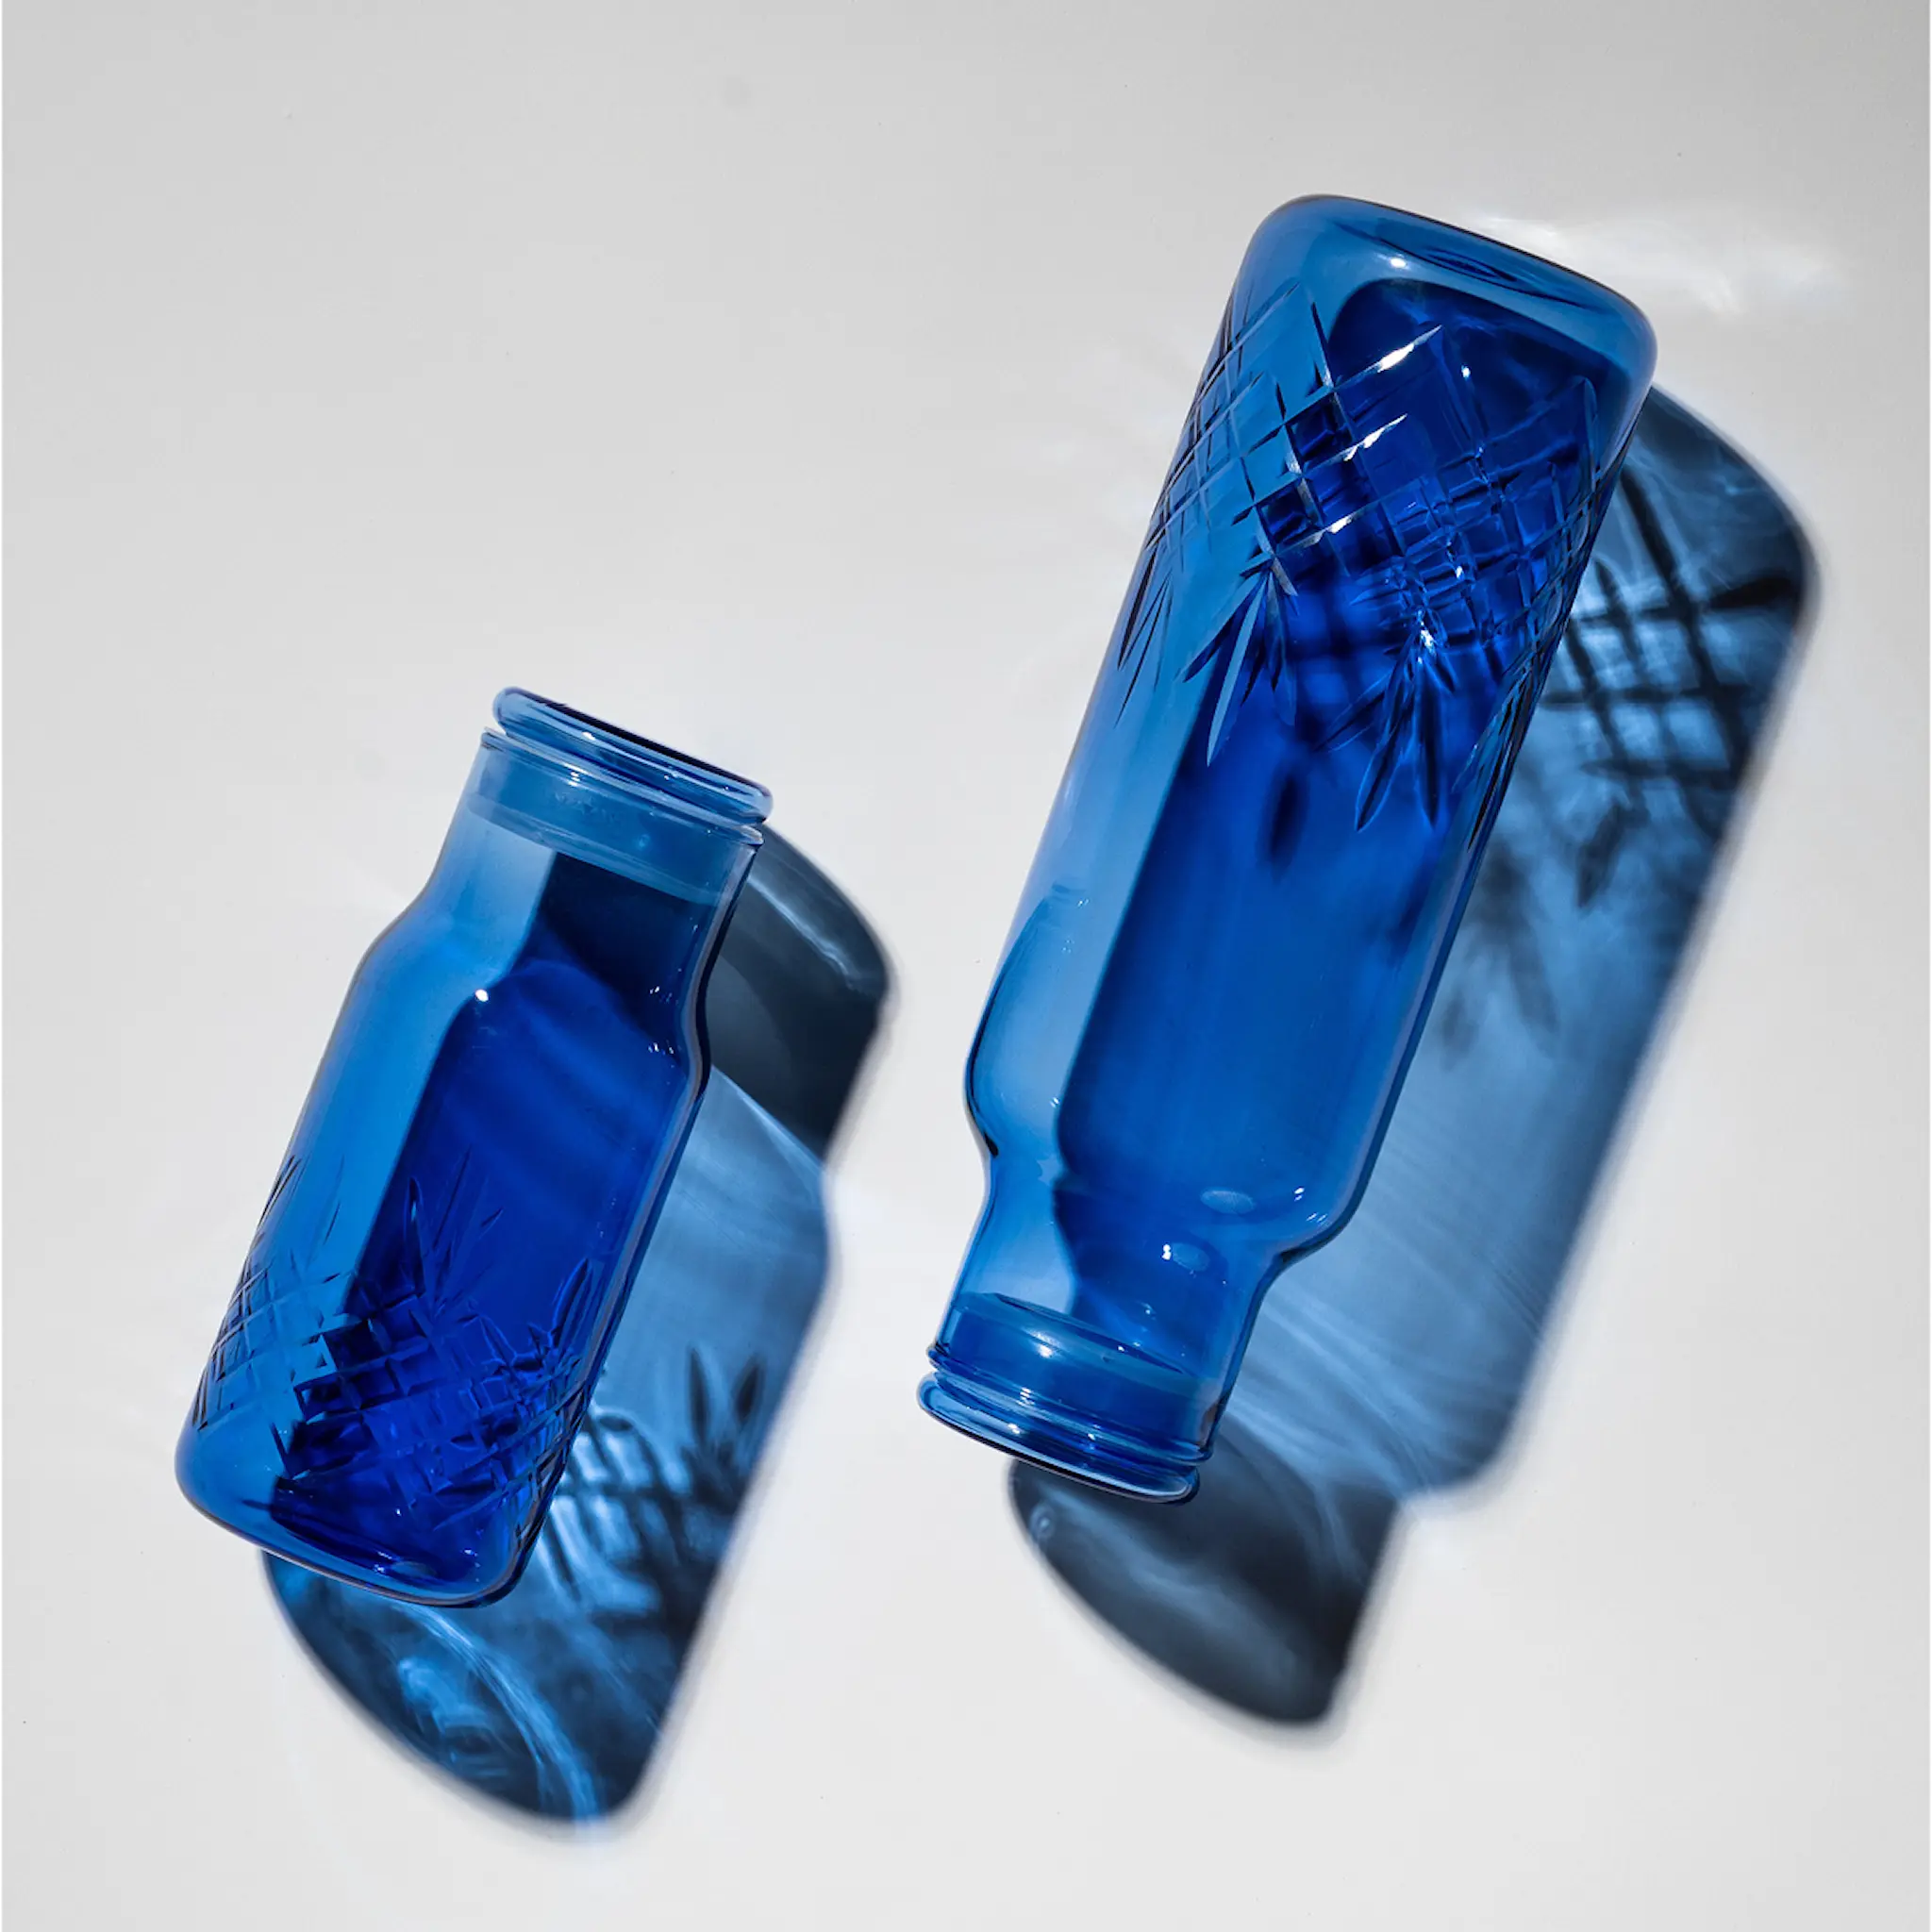 Frederik Bagger Crispy Bottle Small Karaffel 50 cl Blue